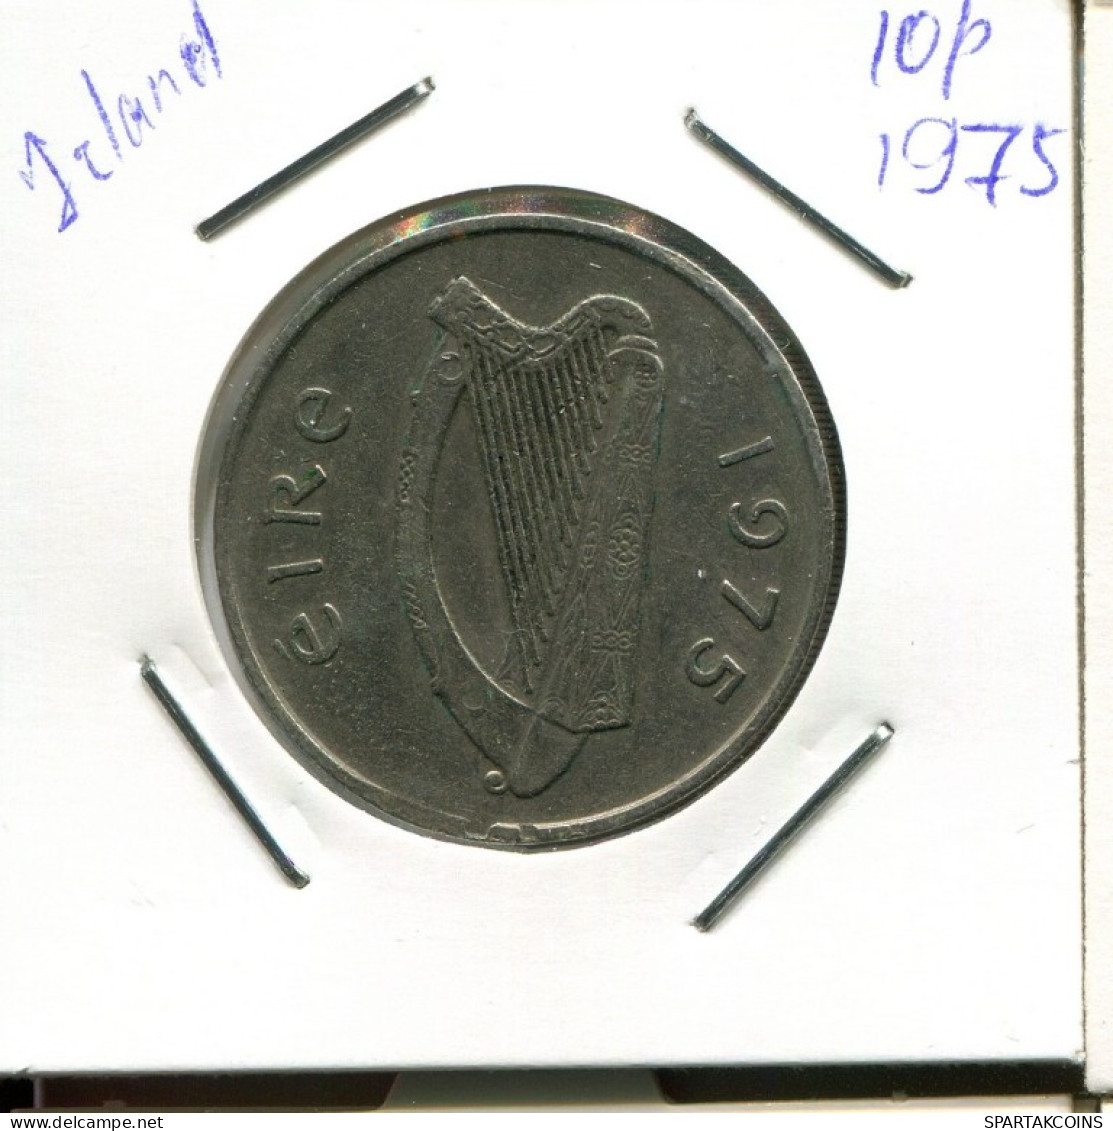 10 PENCE 1975 IRLANDE IRELAND Pièce #AN607.F.A - Irland